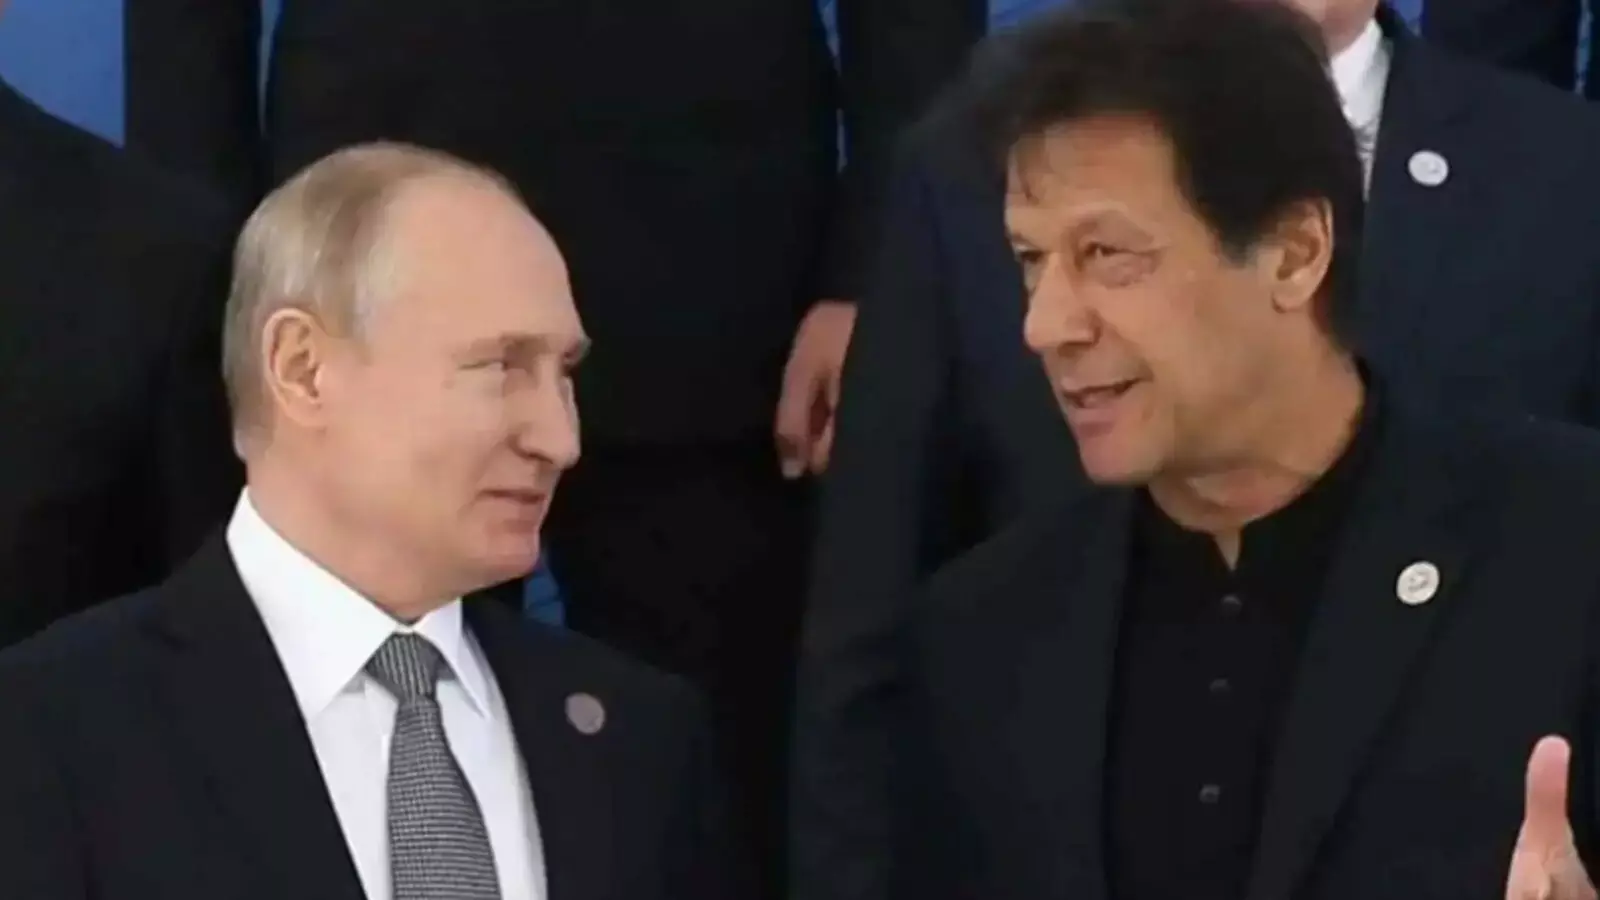 Ukraine minefield greets Imran Khan during Russia visit